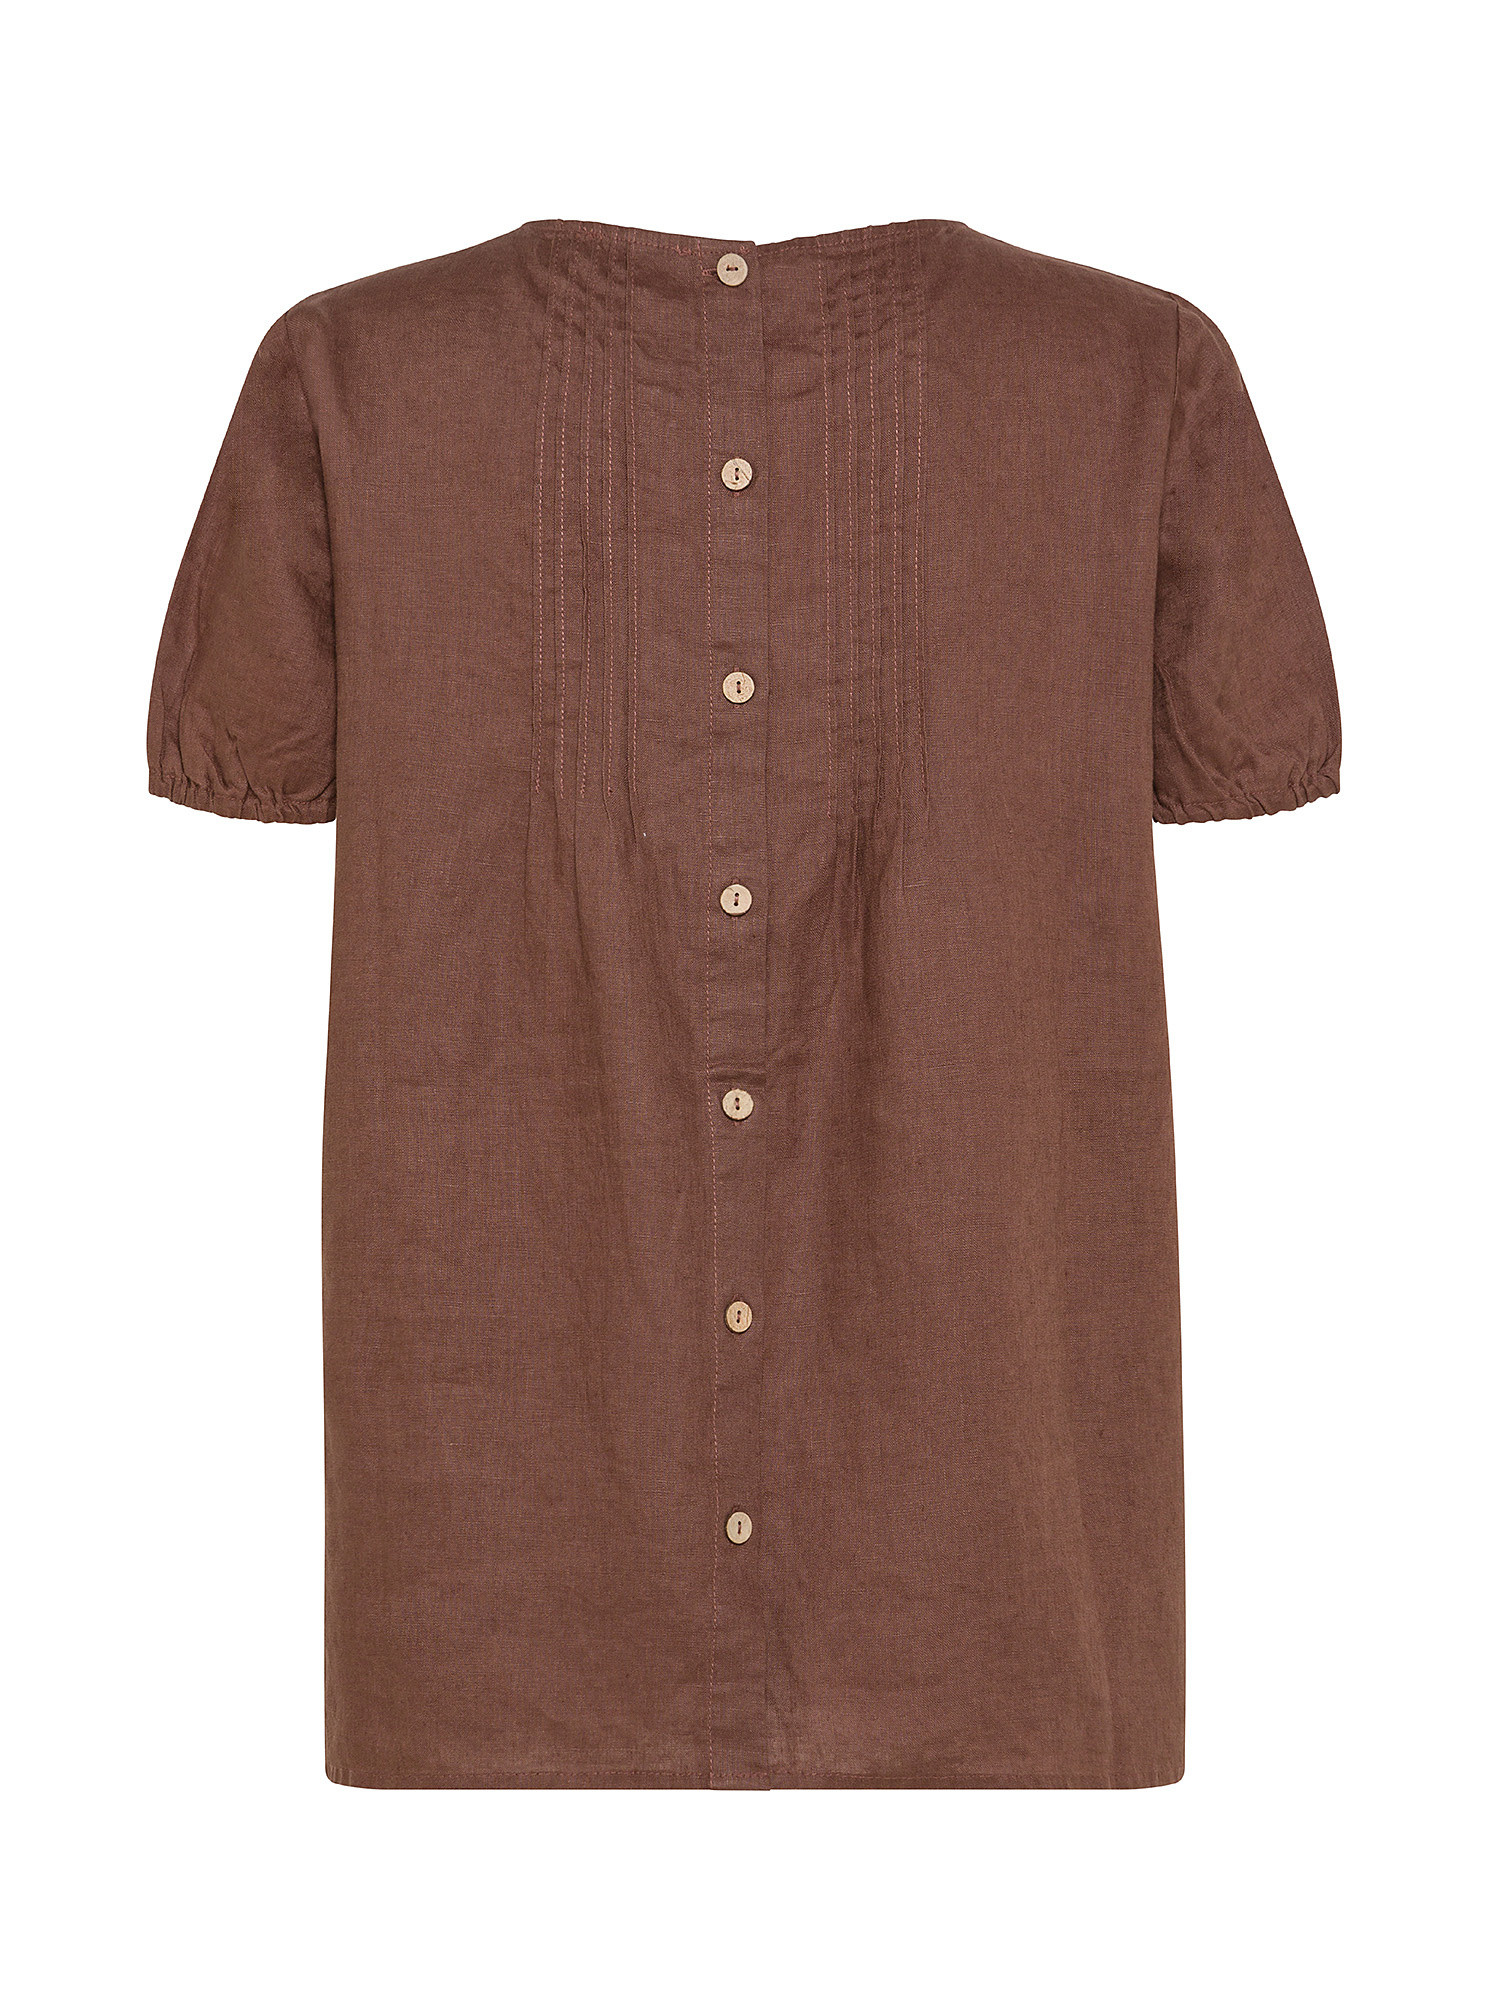 Koan - Linen blouse, Brown, large image number 1